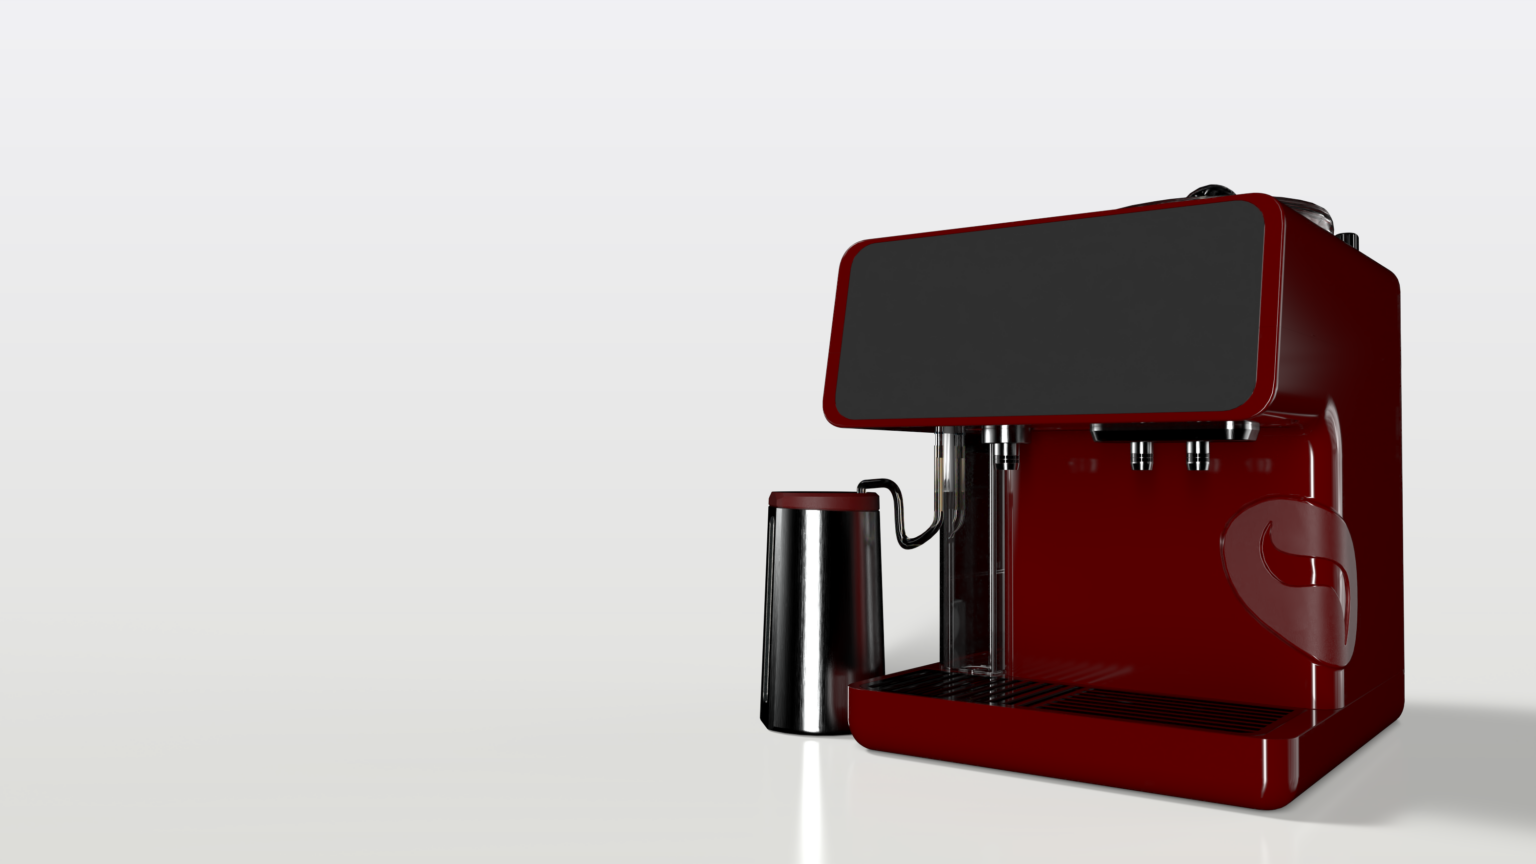 Coffee Machine designed in NX